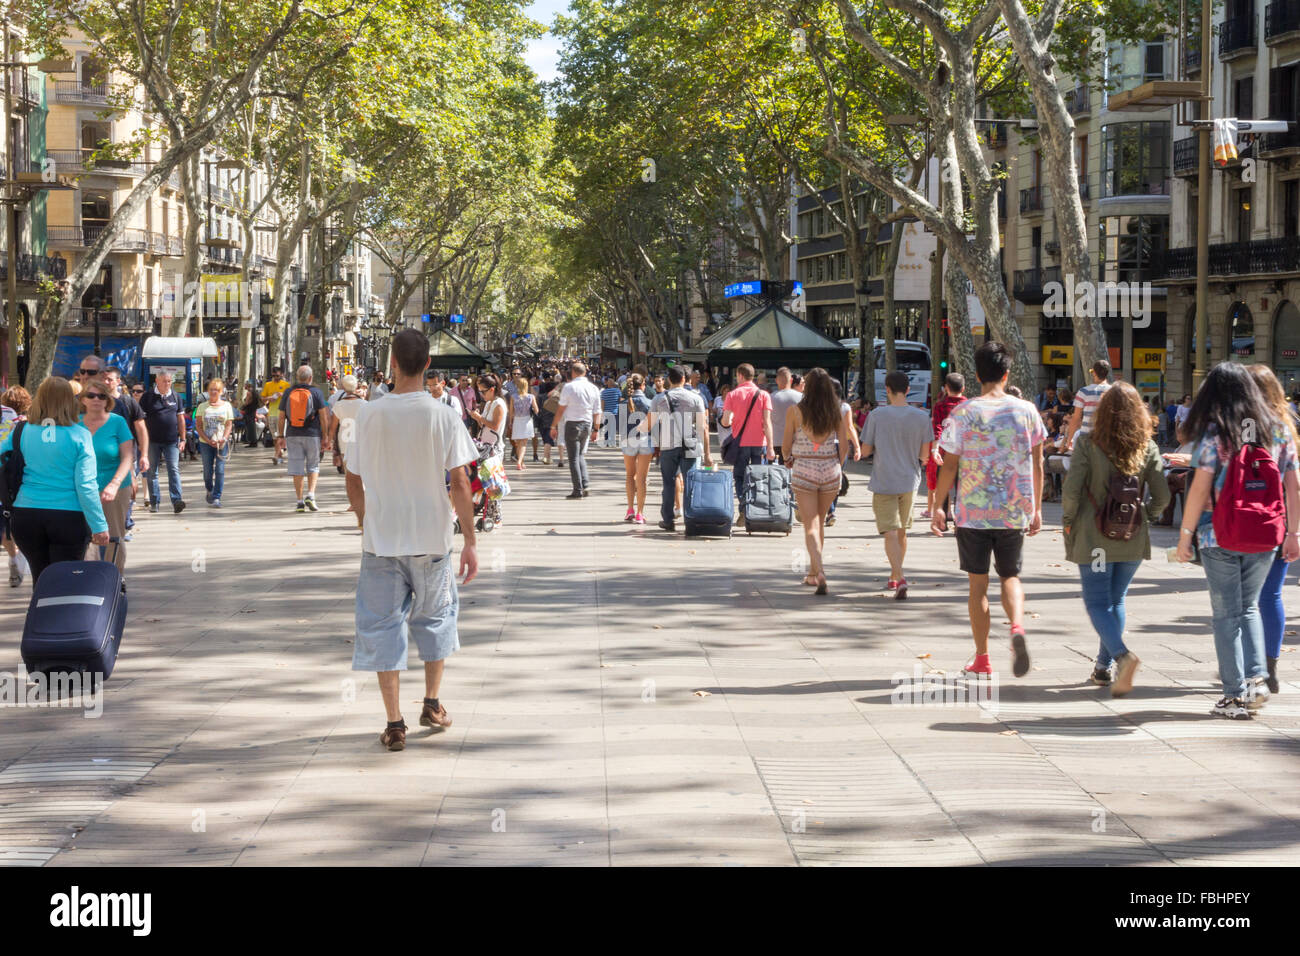 Passeig De Gracia Shopping Street In Barcelona Spain Stock Photo - Download  Image Now - iStock